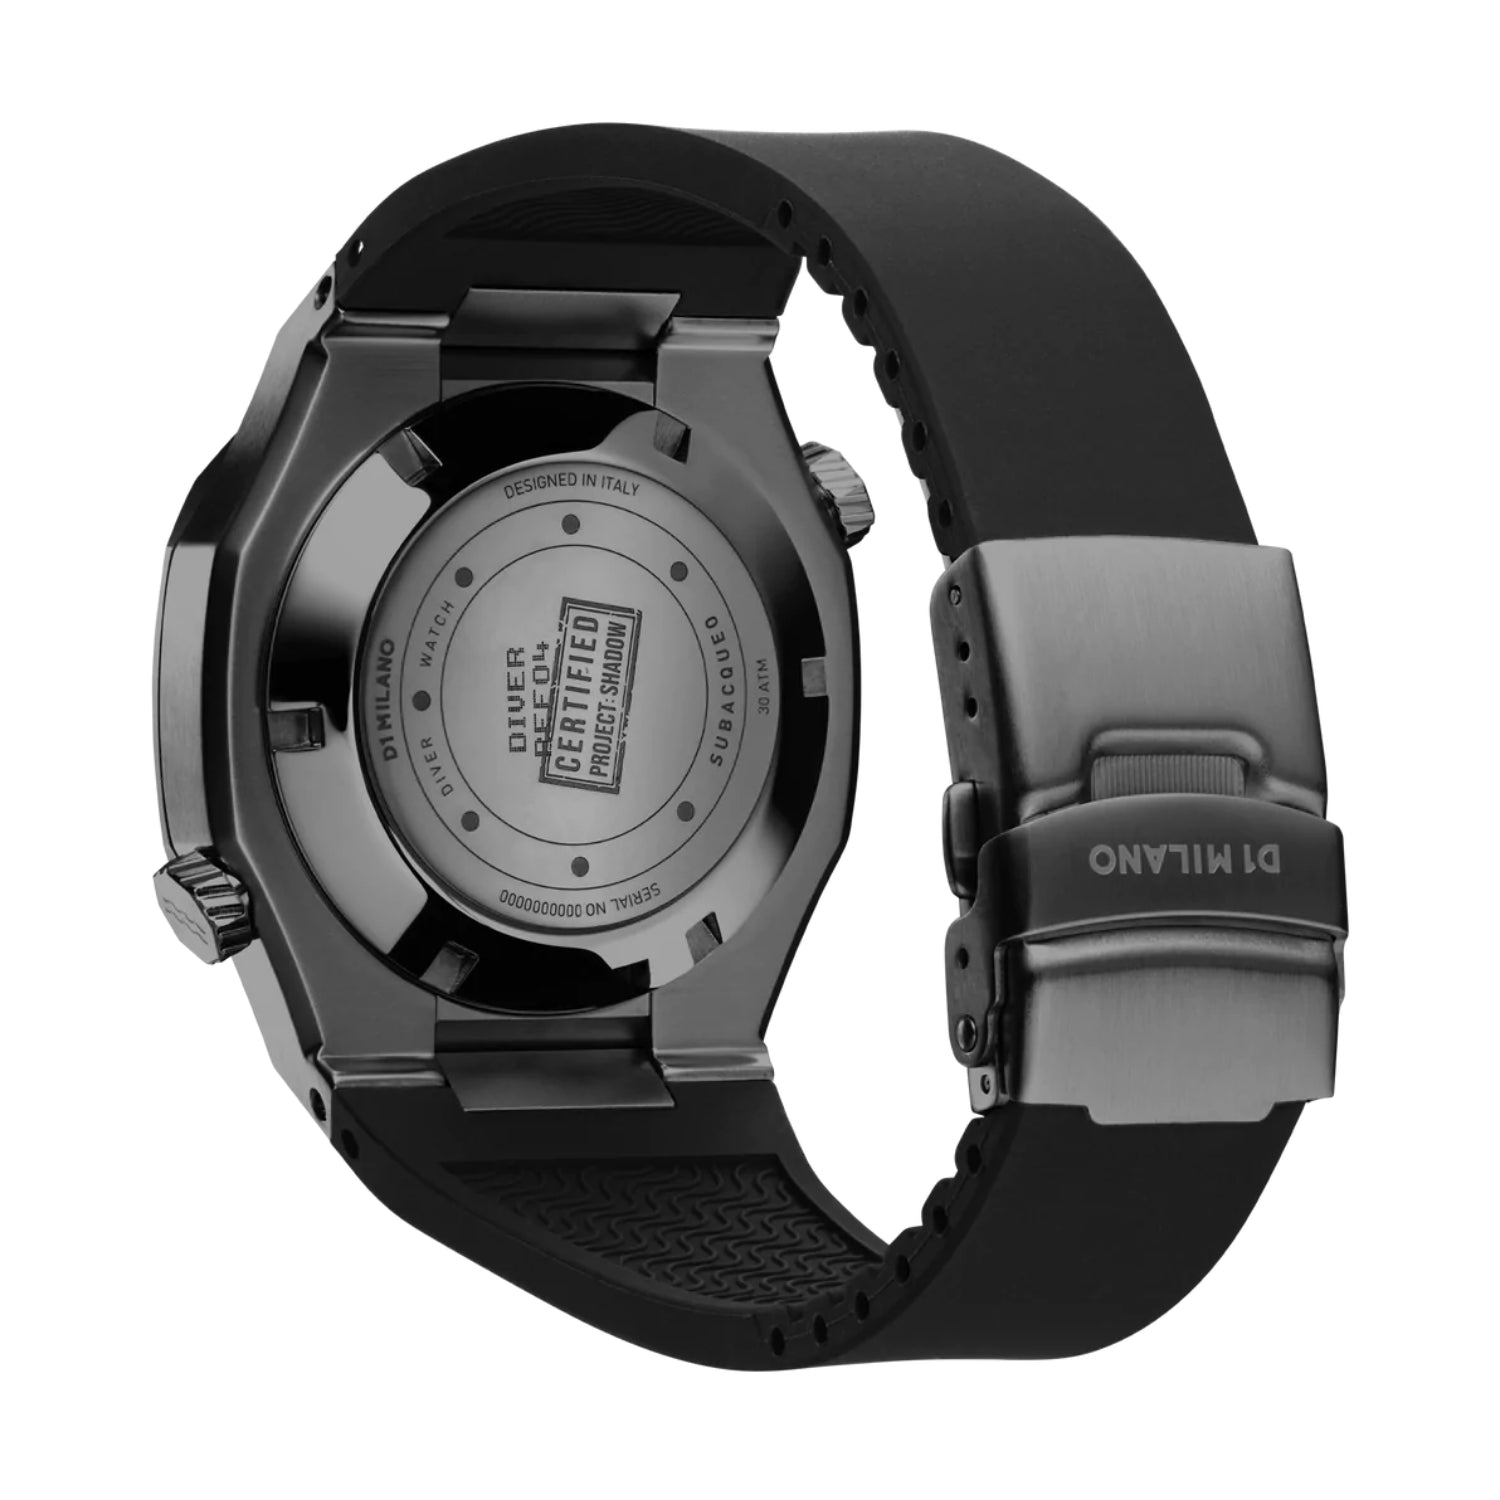 D1 Milano Men's Quartz Watch, Black Dial - ML-0259